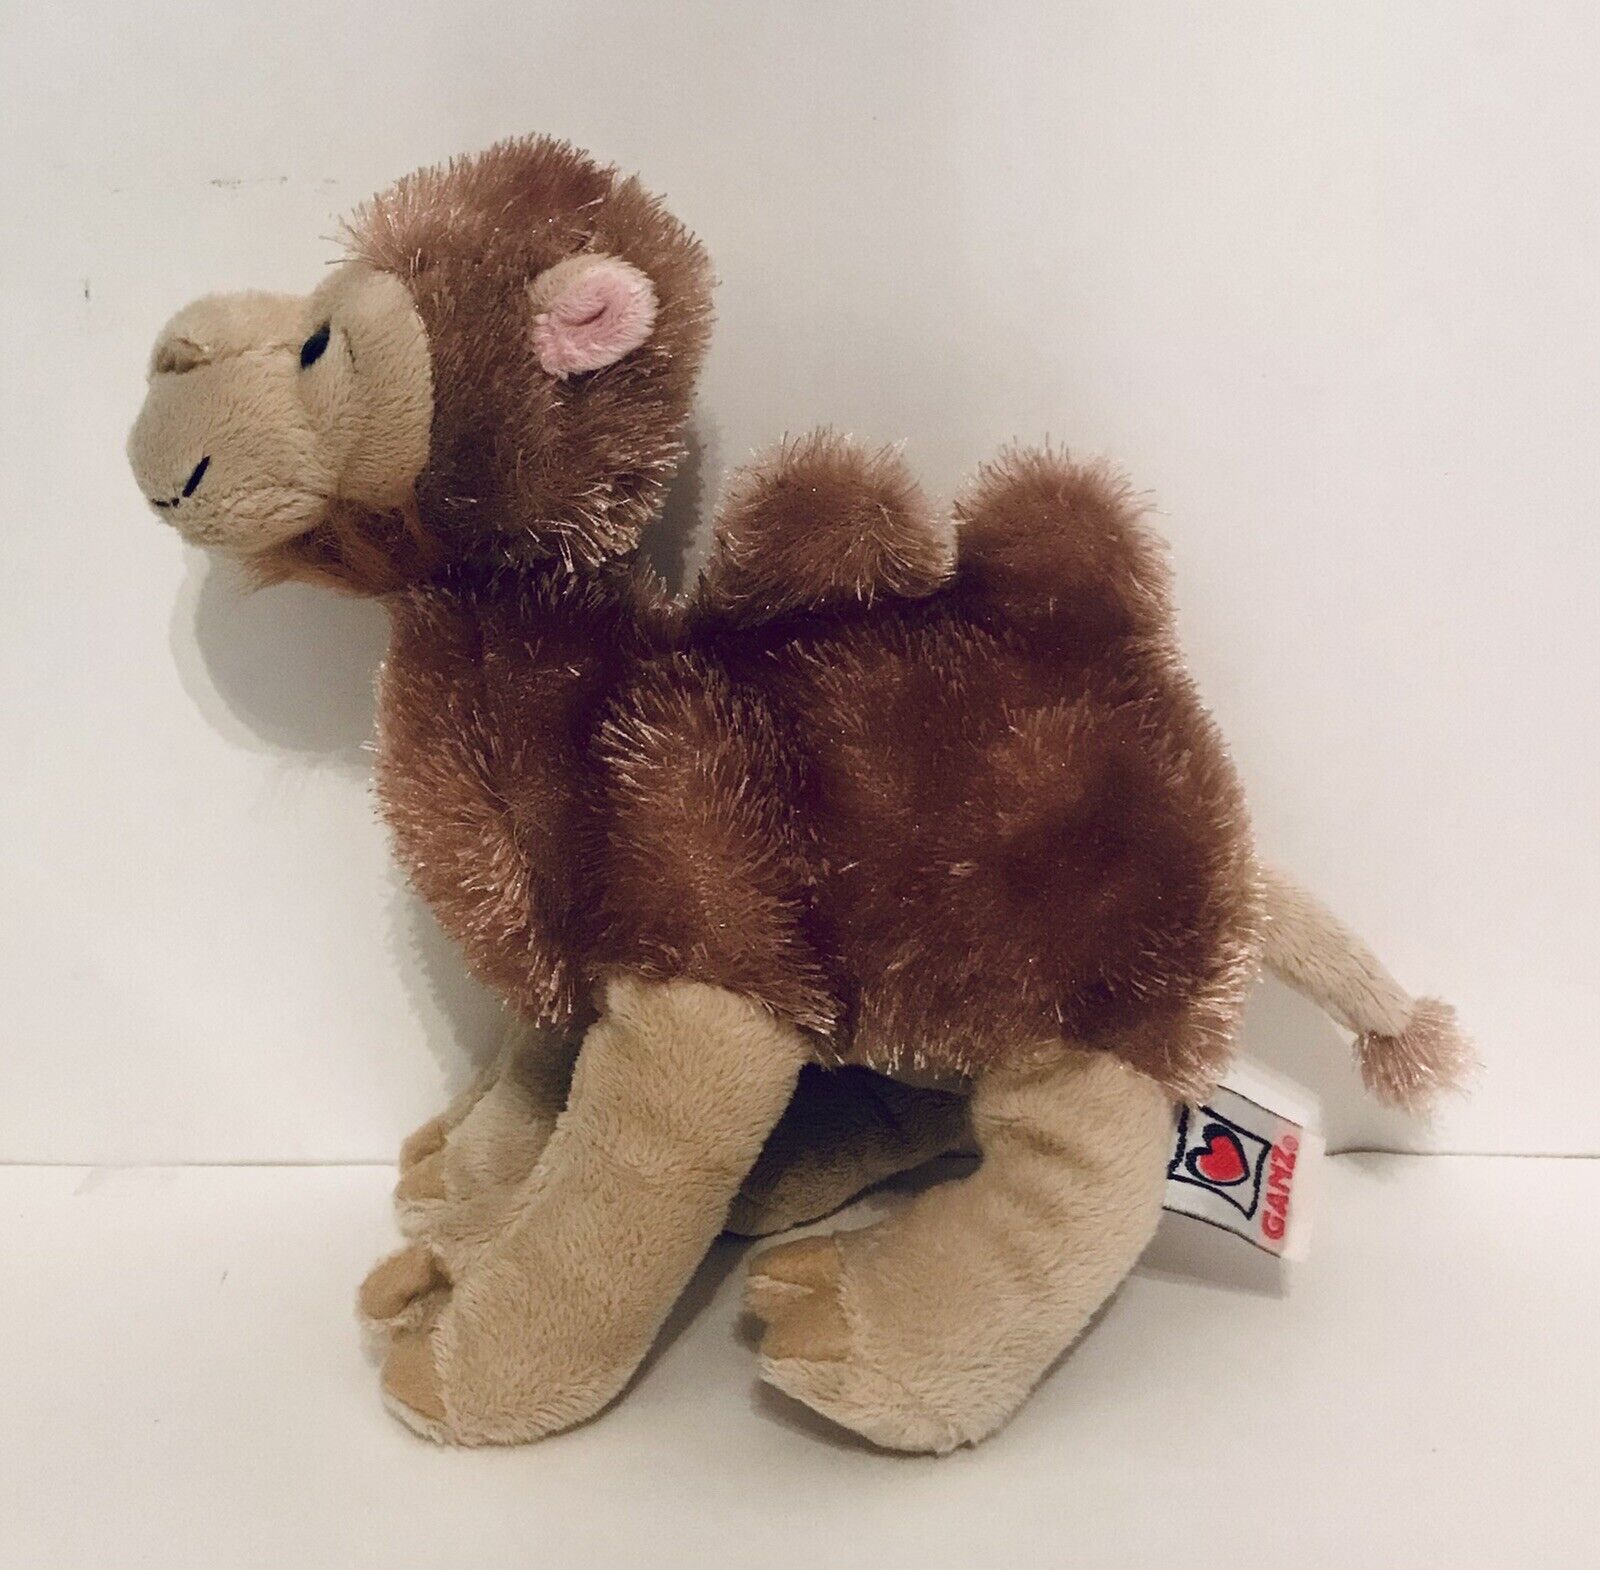 Ganz Webkinz 2 Hump Camel 9" Plush Stuffed Animal Toy Tan Brown - No Code - Euc